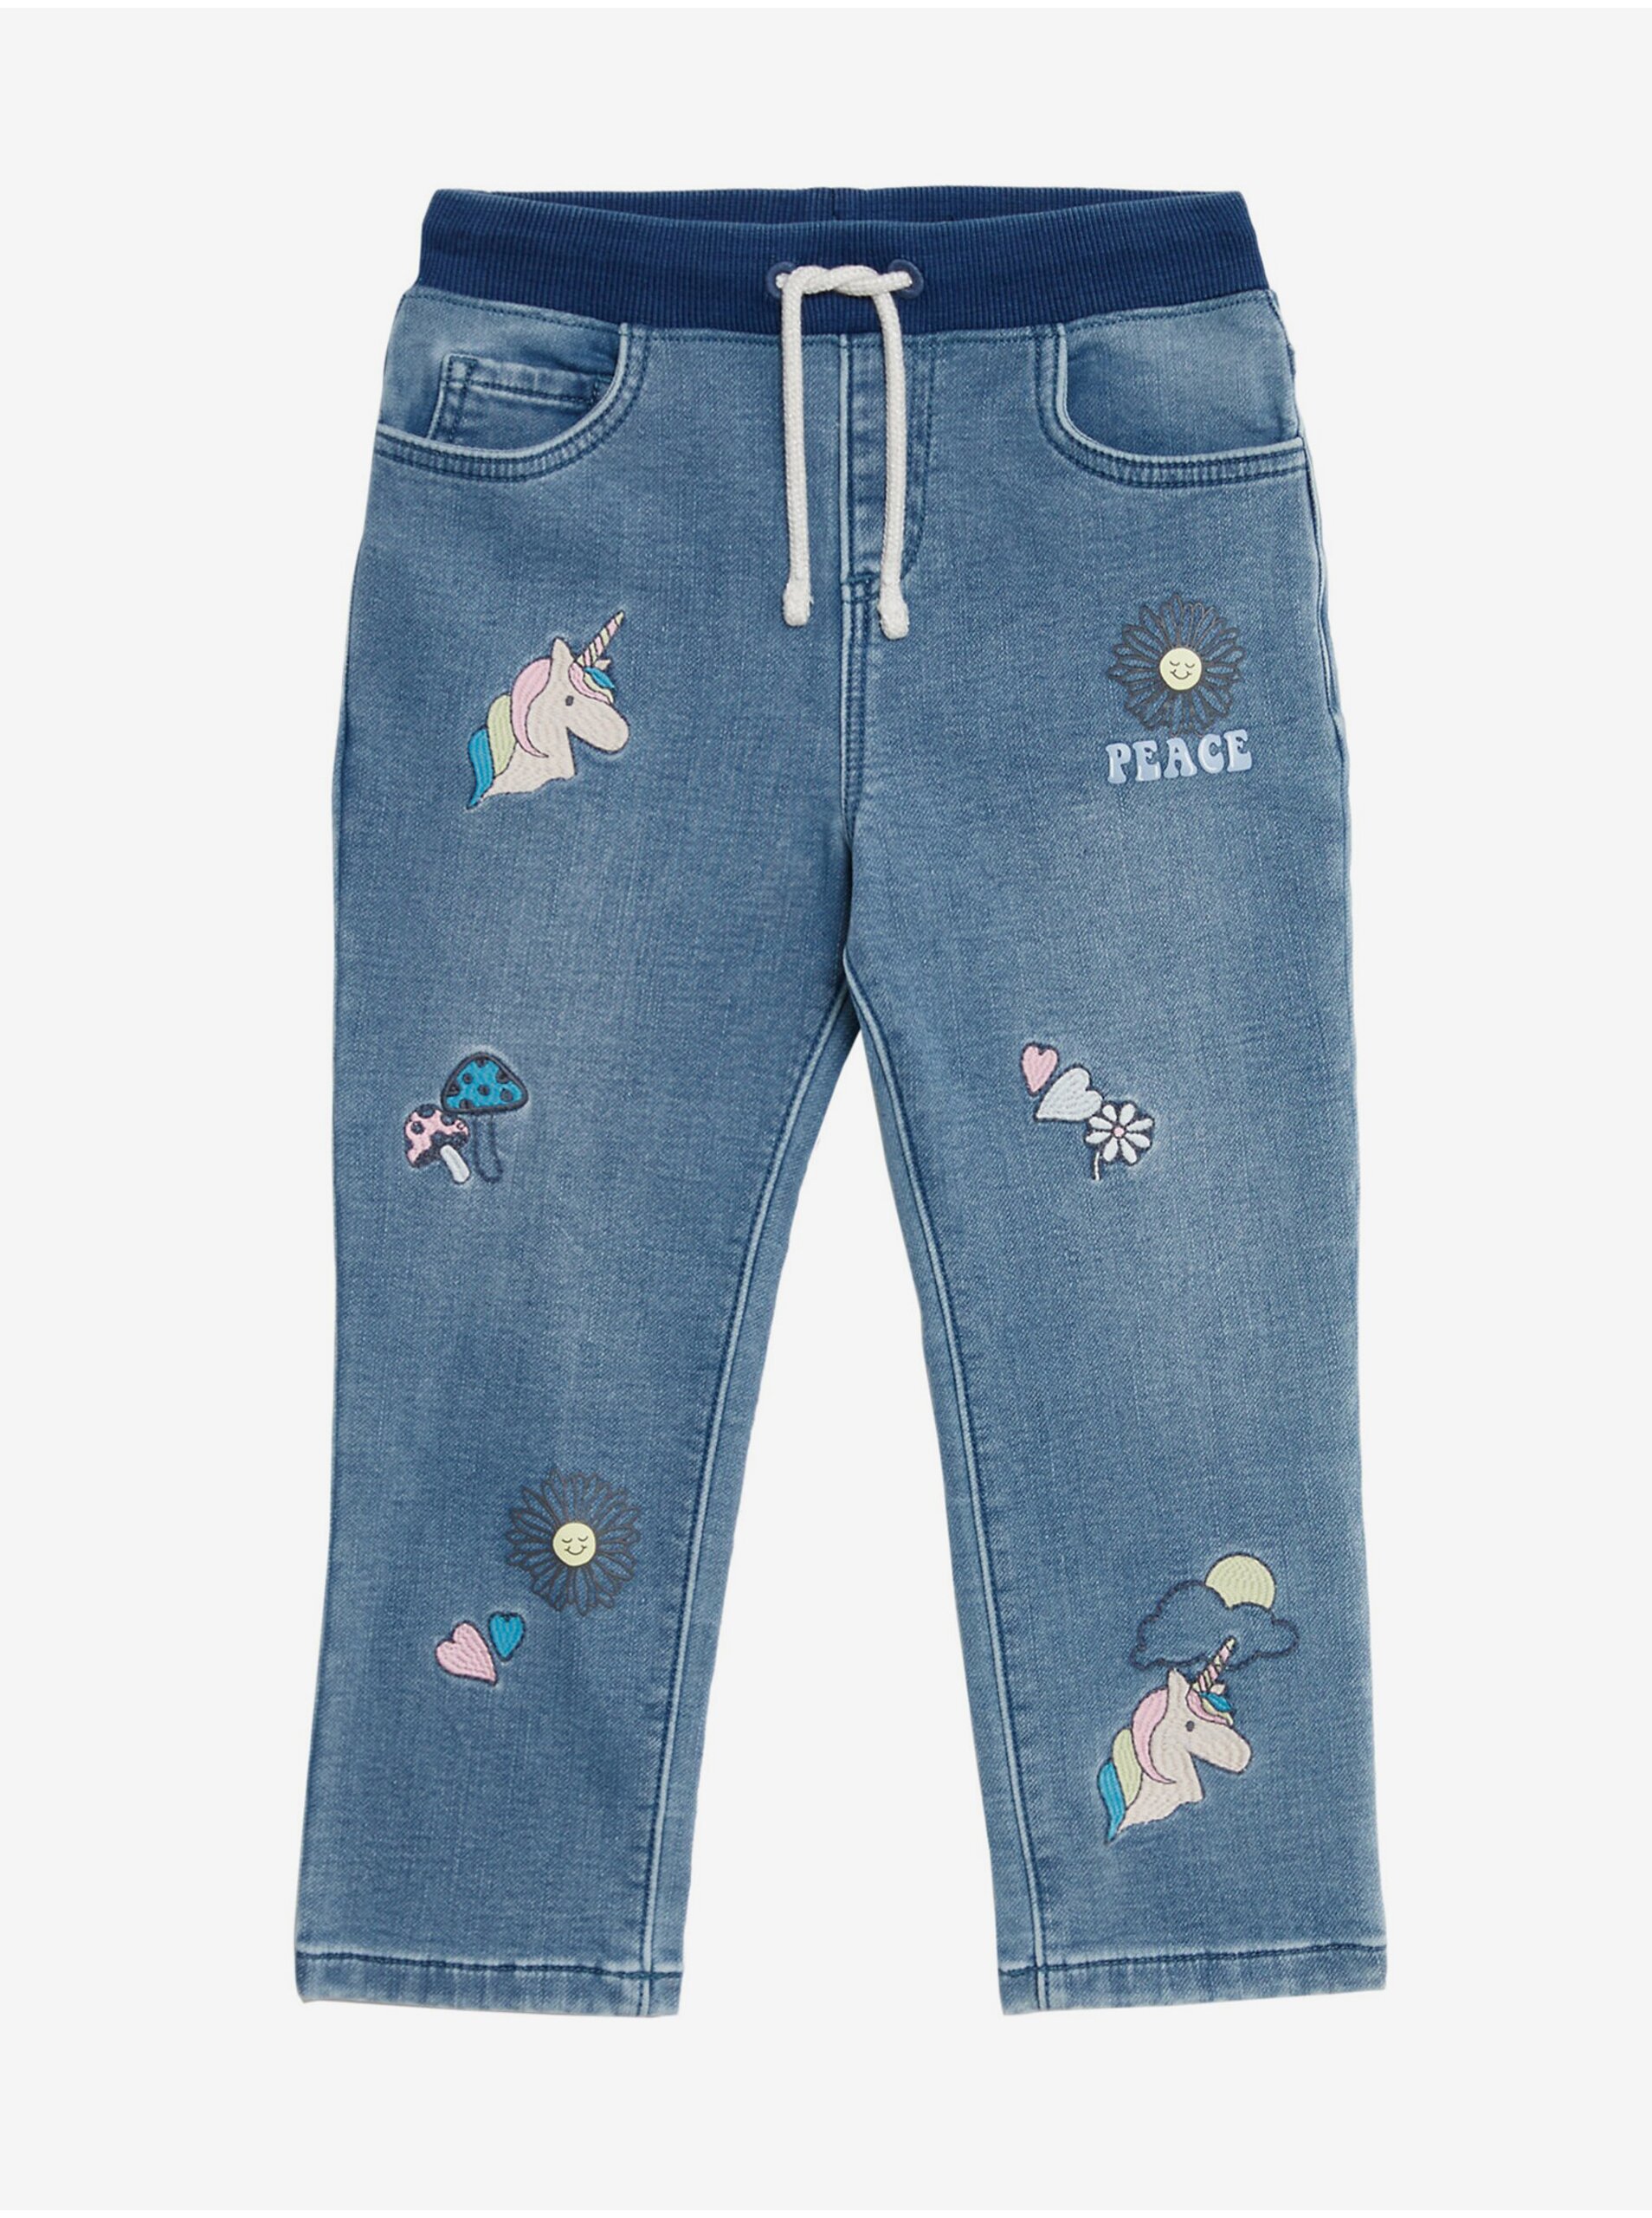 Lacno Modré dievčenské džínsy s motivom jednorožca Marks & Spencer